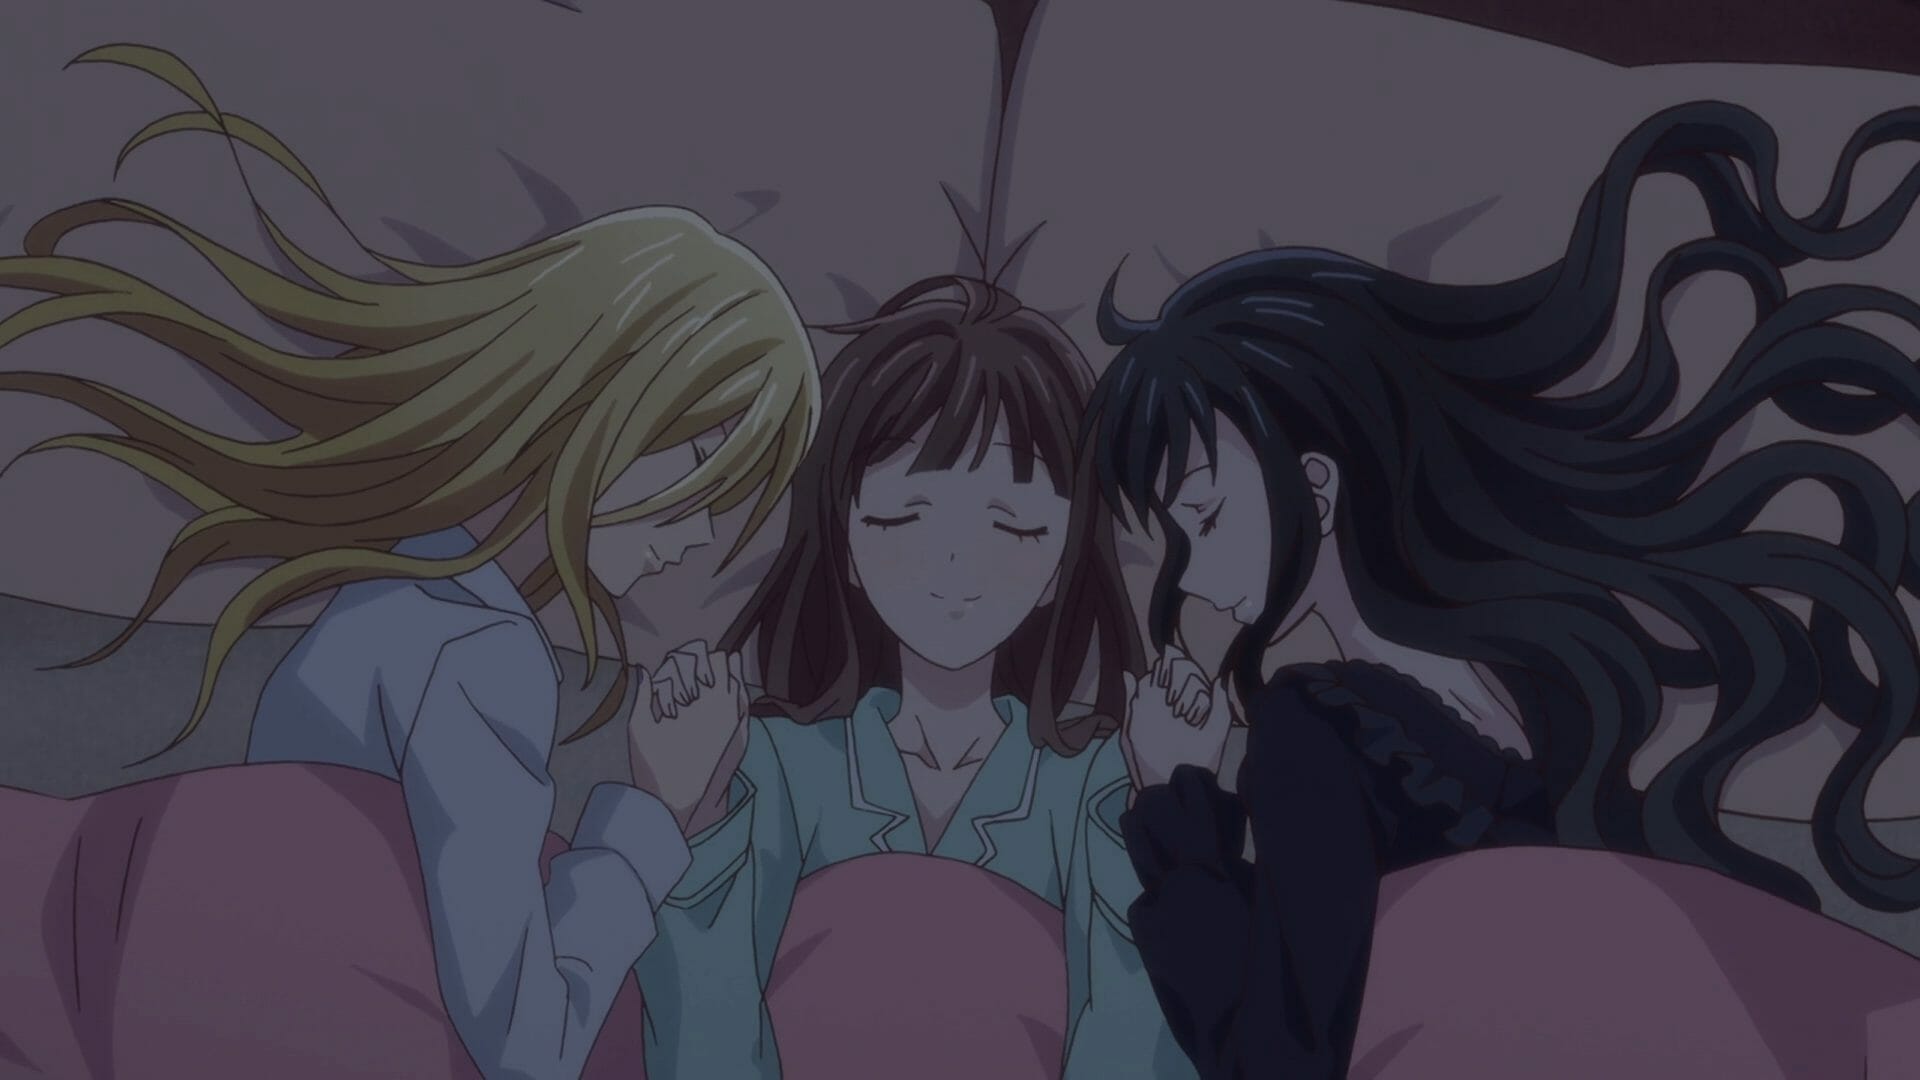 Fruits Basket (2019) Anime Still - Arisa Uotani and Saki Hanajima embrace Tohru Honda warmly as they sleep together in the same bed.